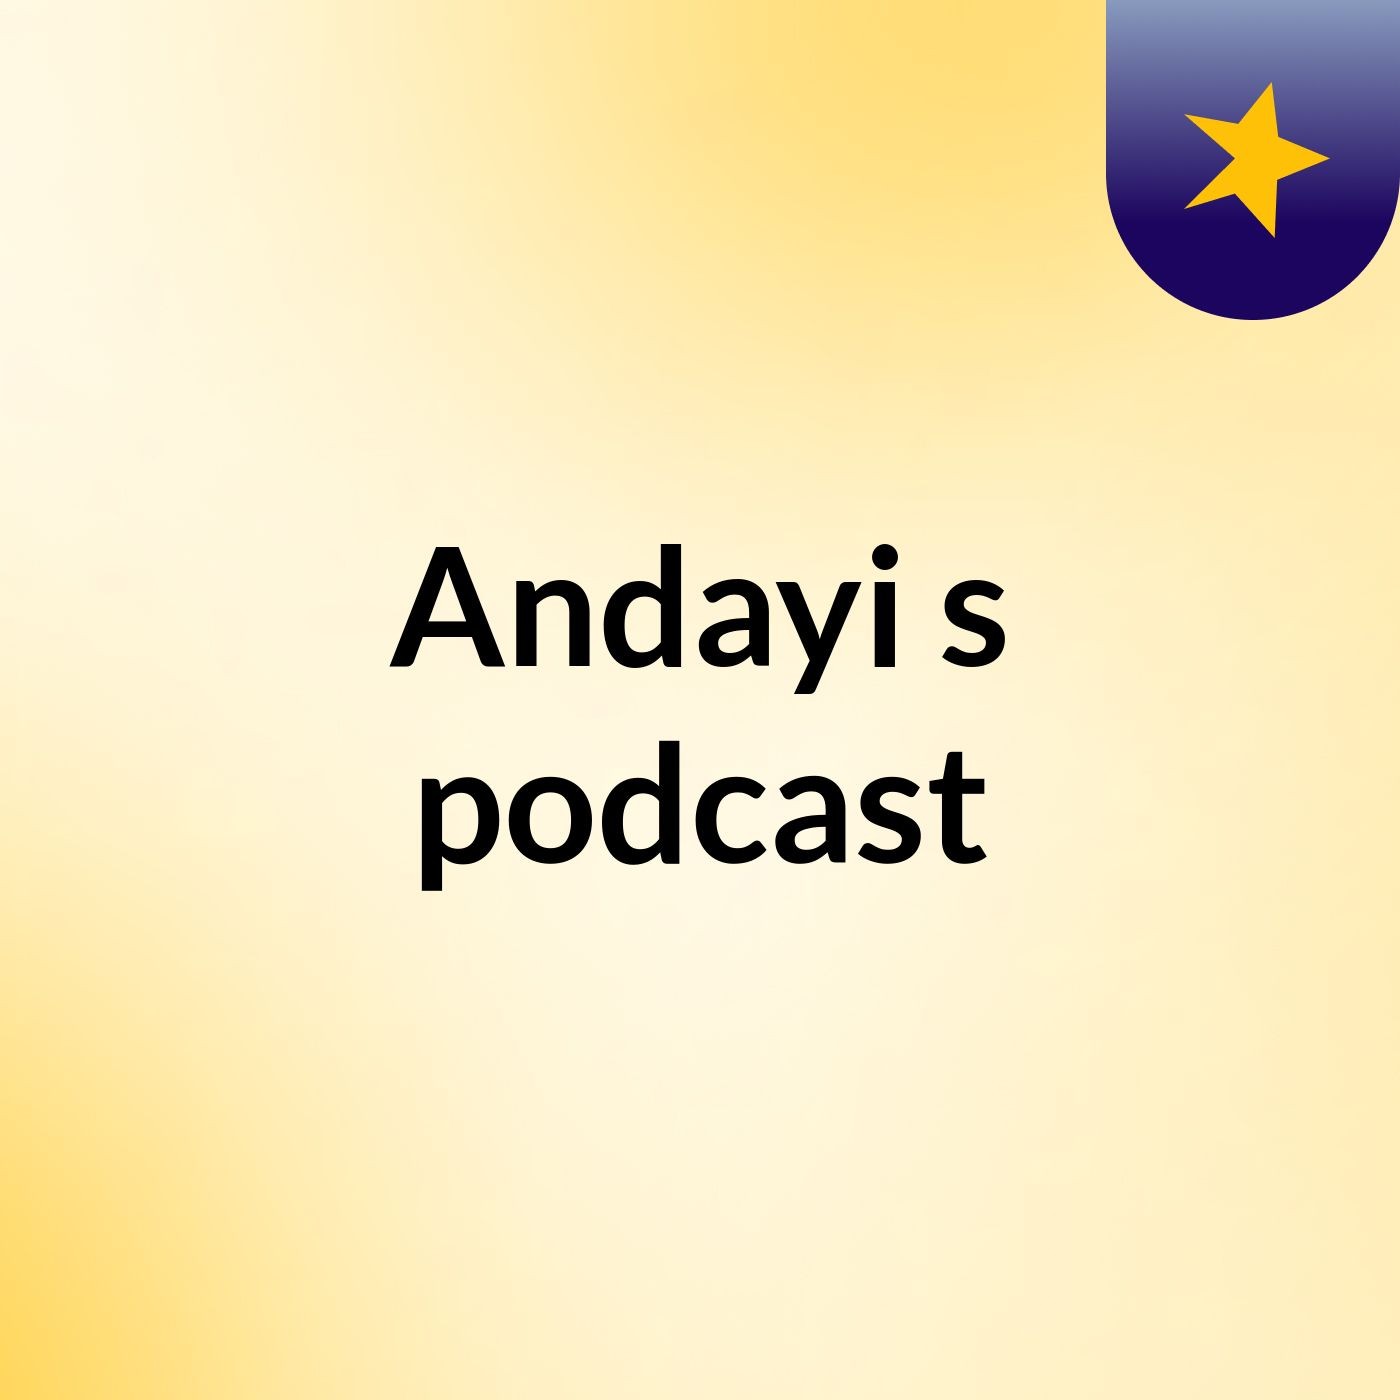 Andayi's podcast